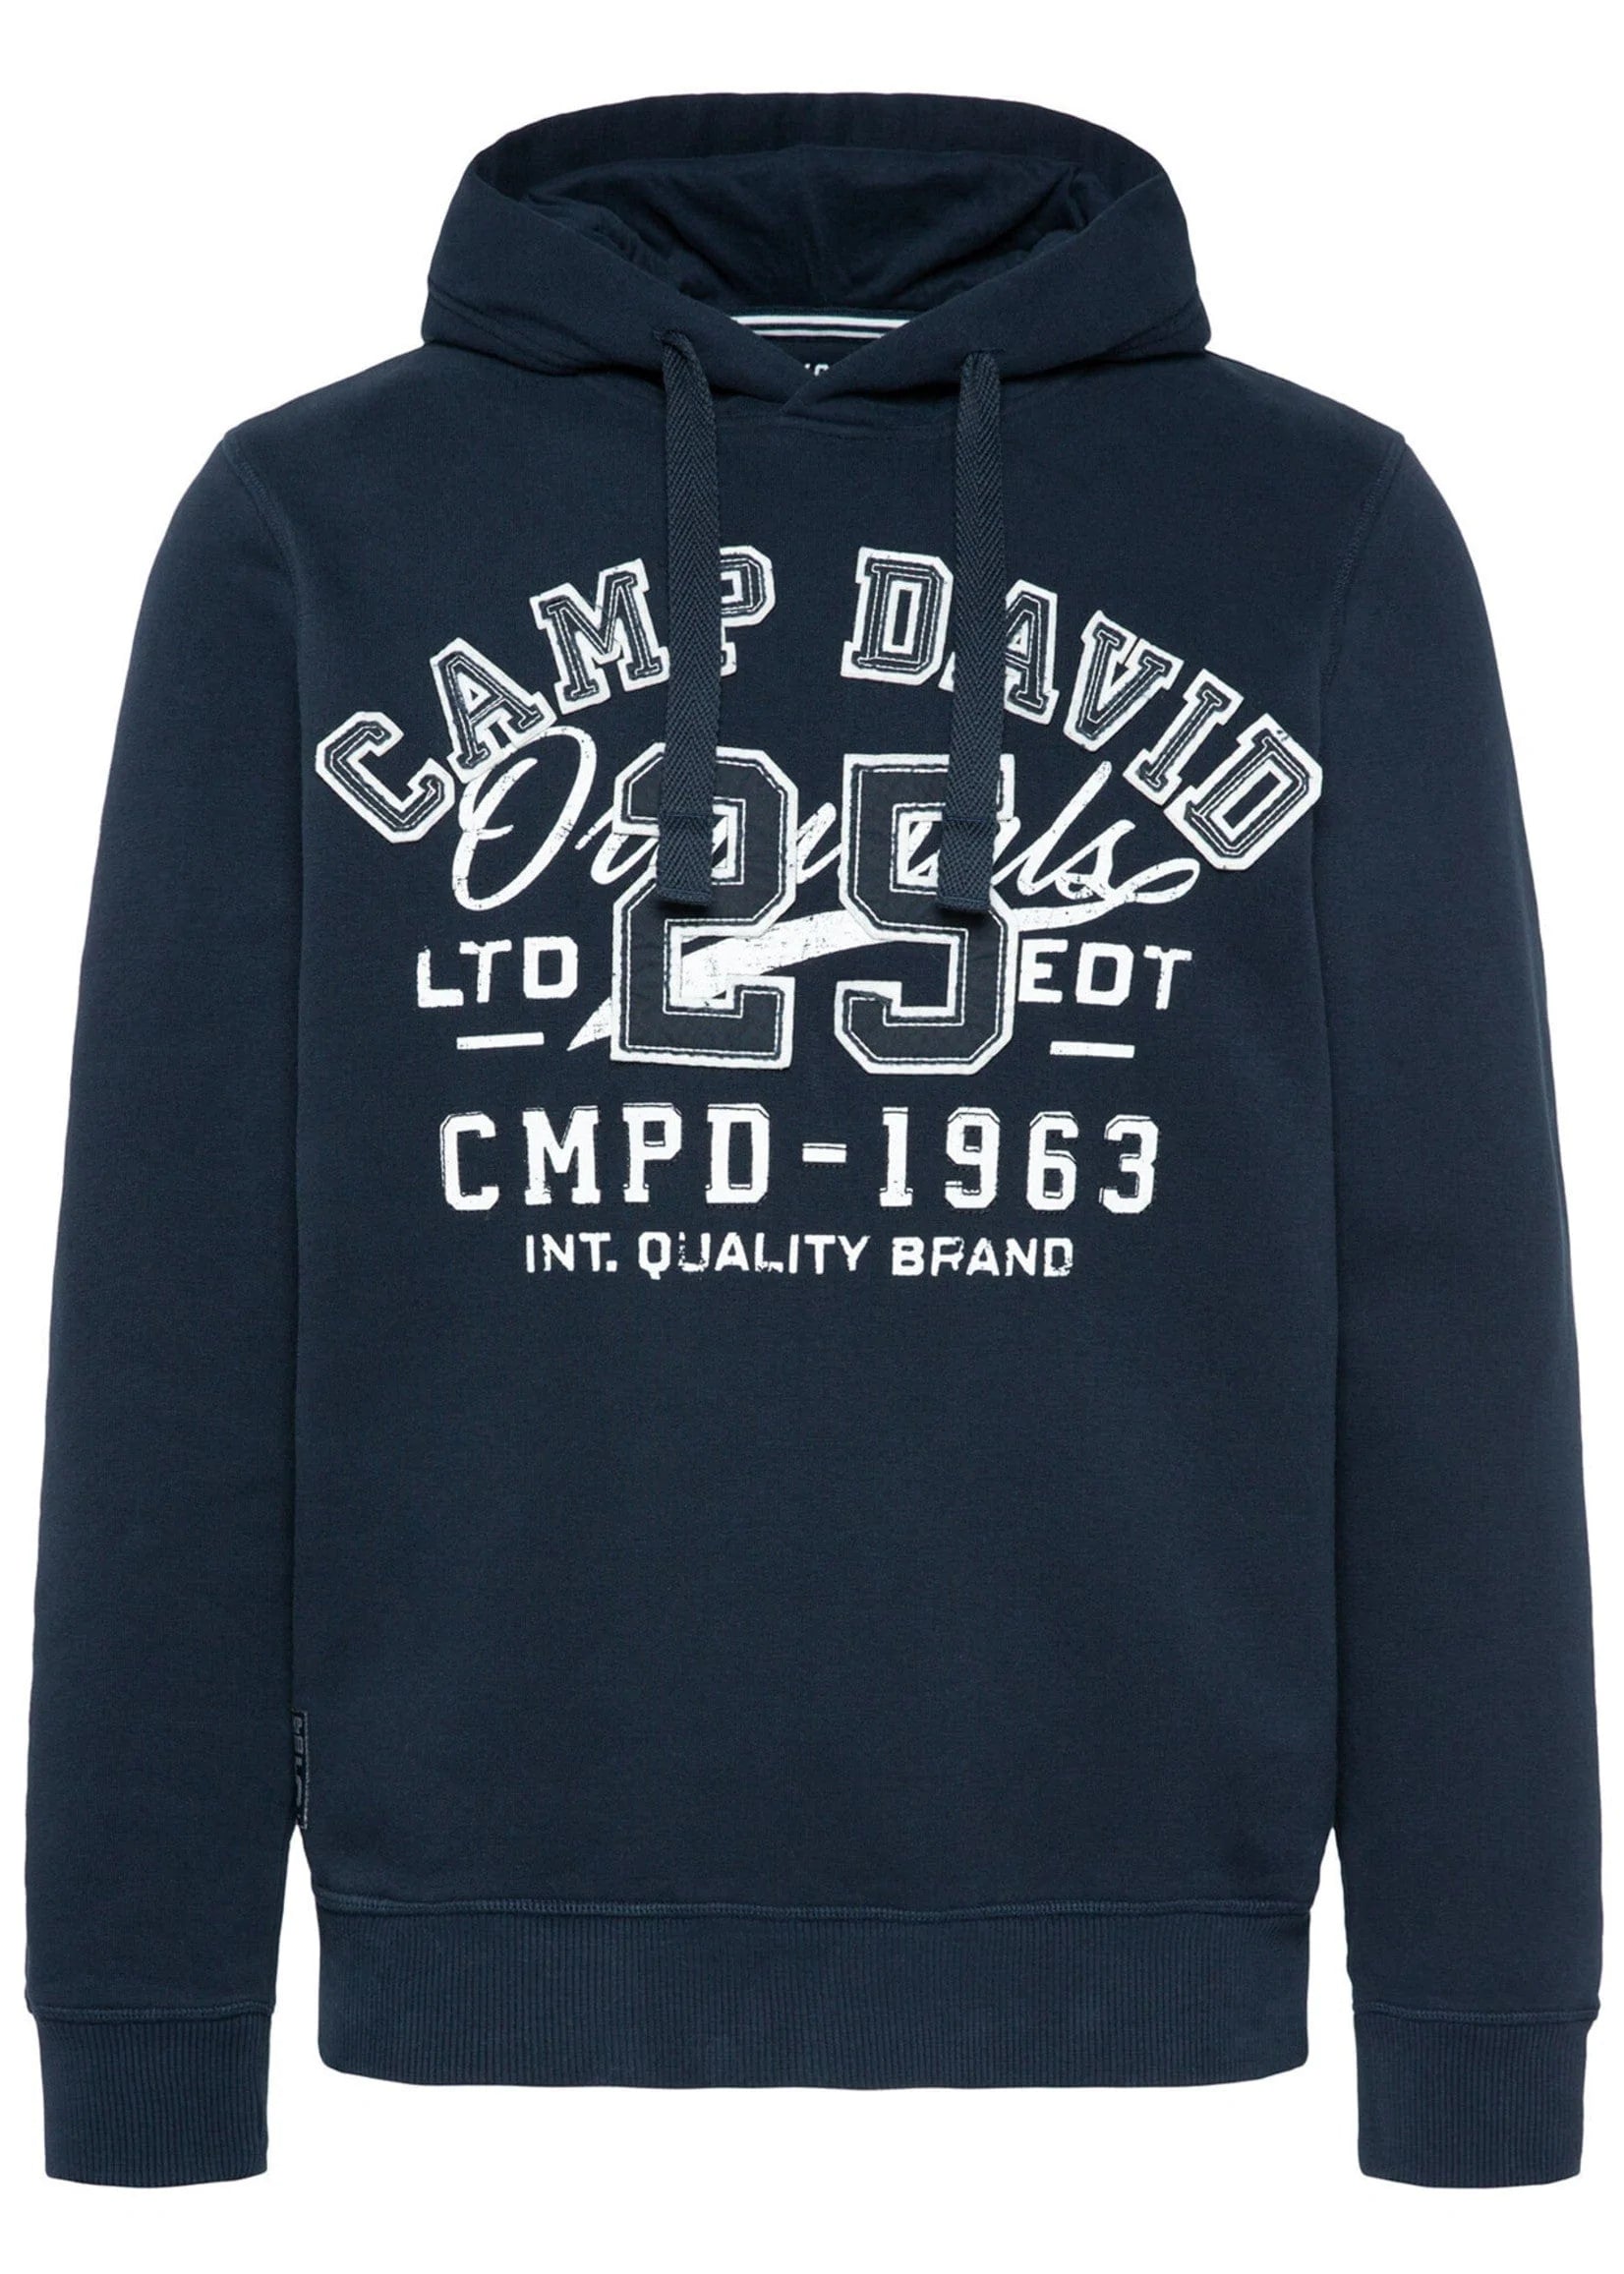 Camp David Retro hooded sweatshirt, blue - Stateshop Fashion